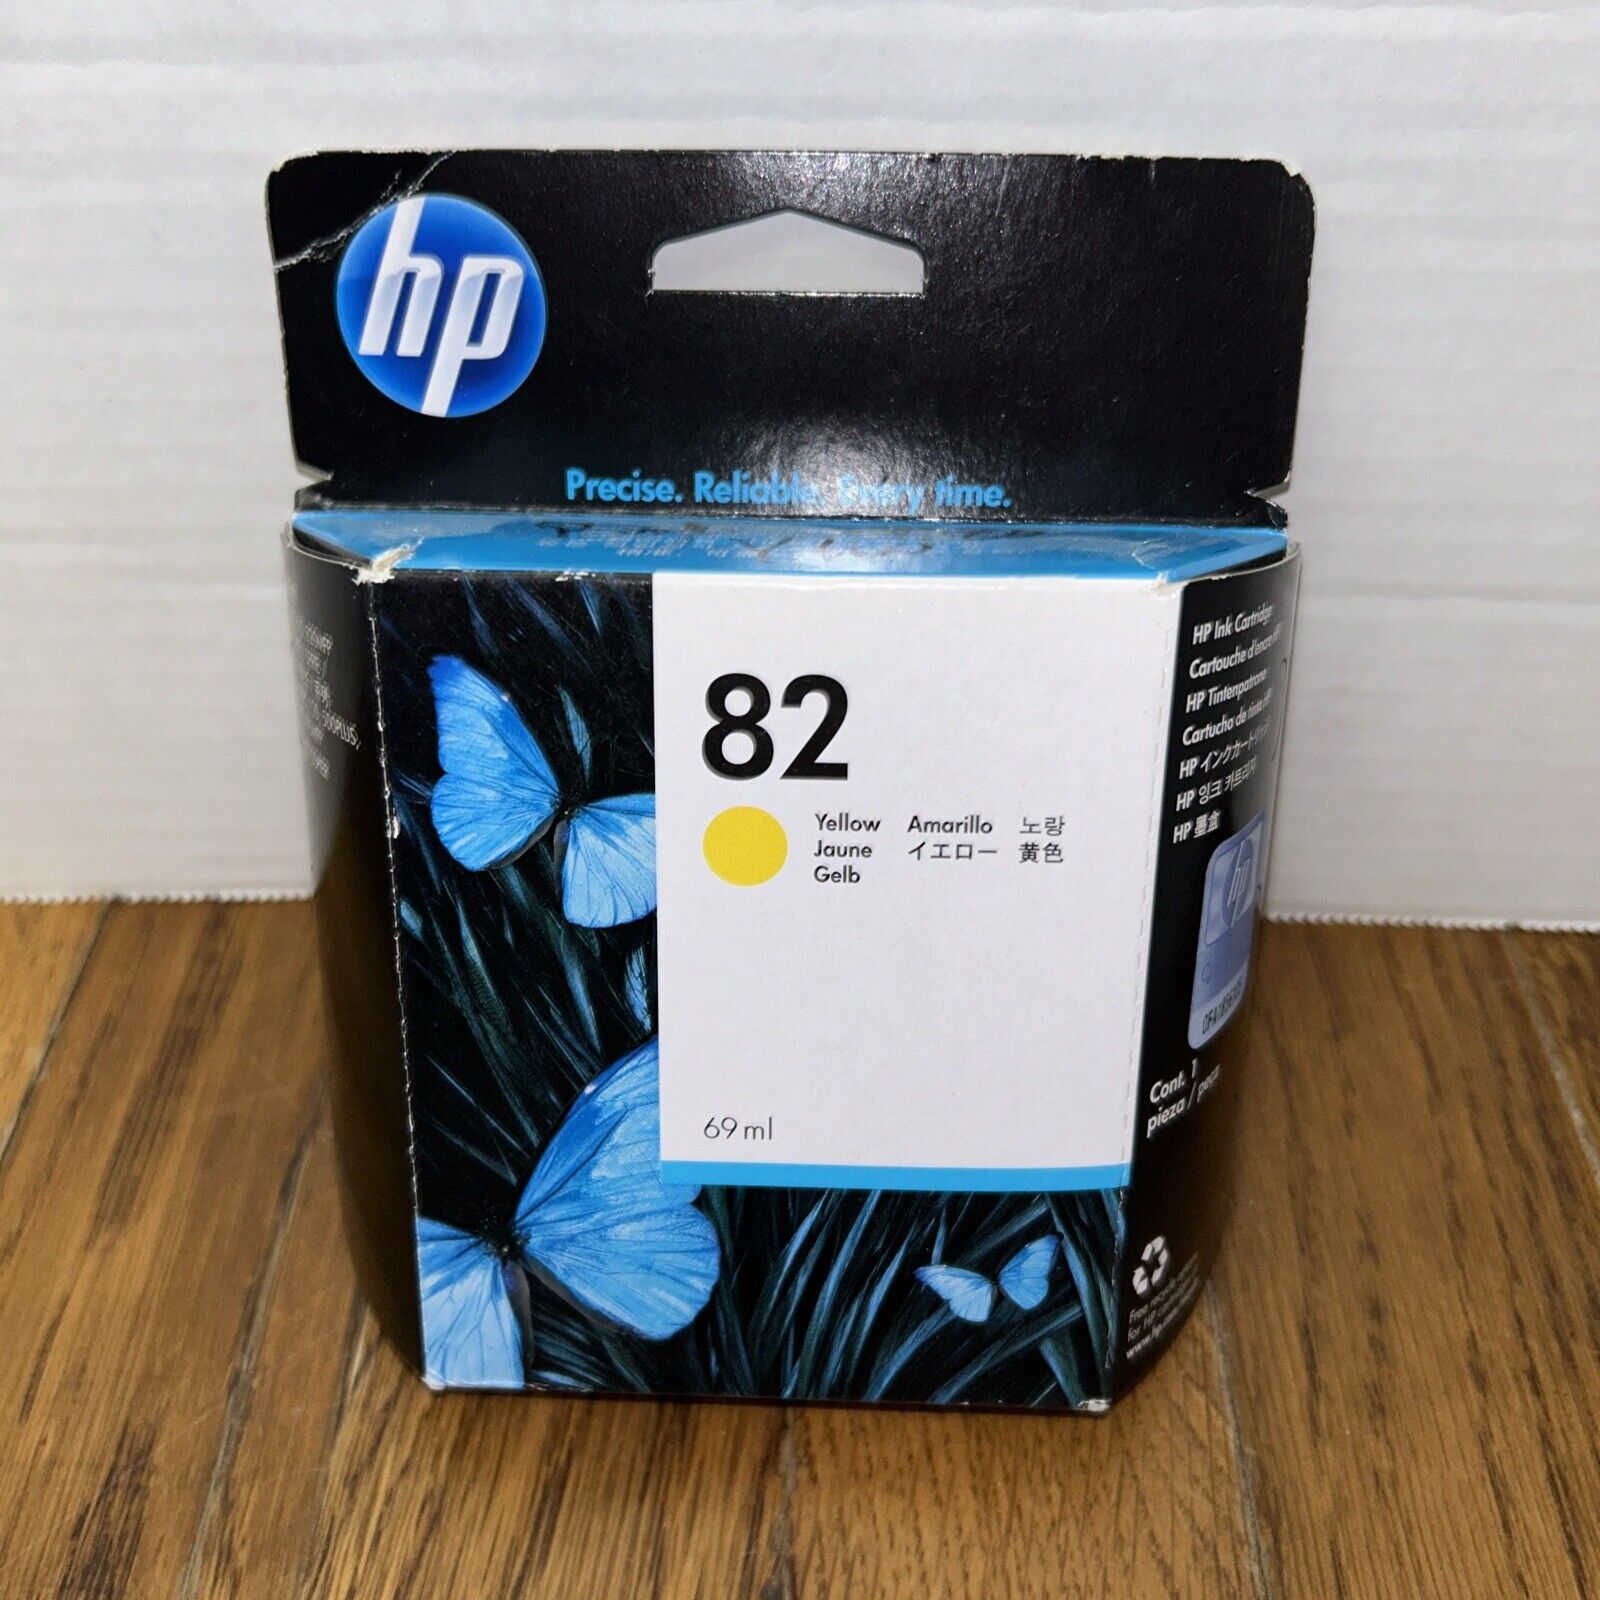 NEW GENUINE HP 82 Yellow Ink Cartridge HP C4913A 69ml DesignJet Toner Cartridge 